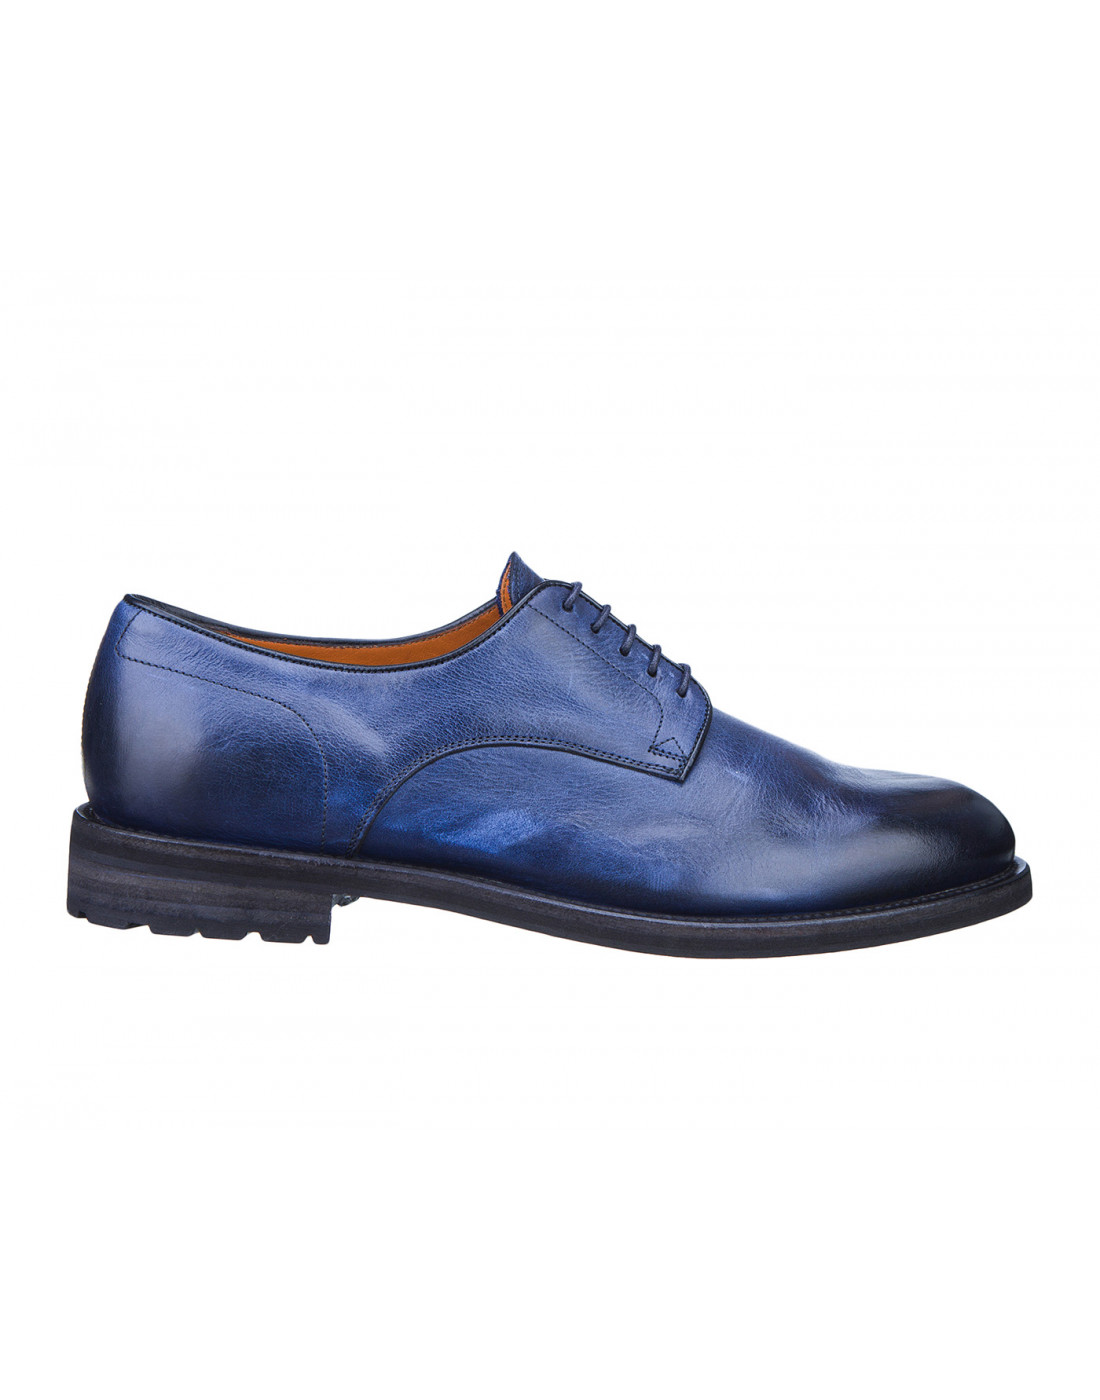 Туфли синие мужские Santoni S14272 - 39-1